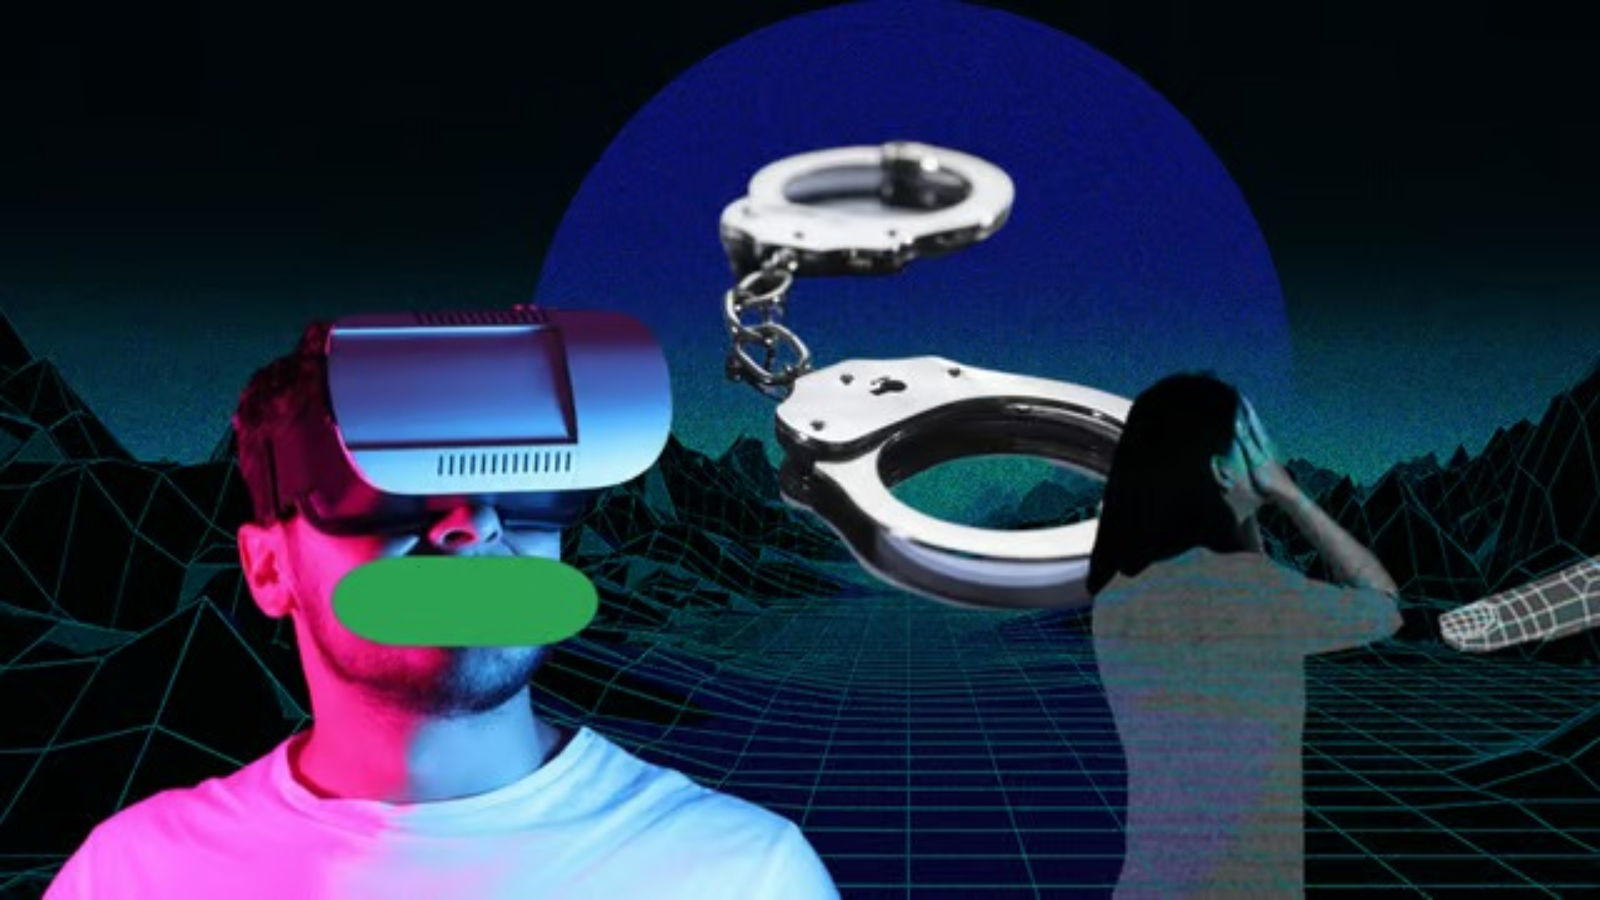 Australian psychologists utilise virtual reality to step into criminals’ world